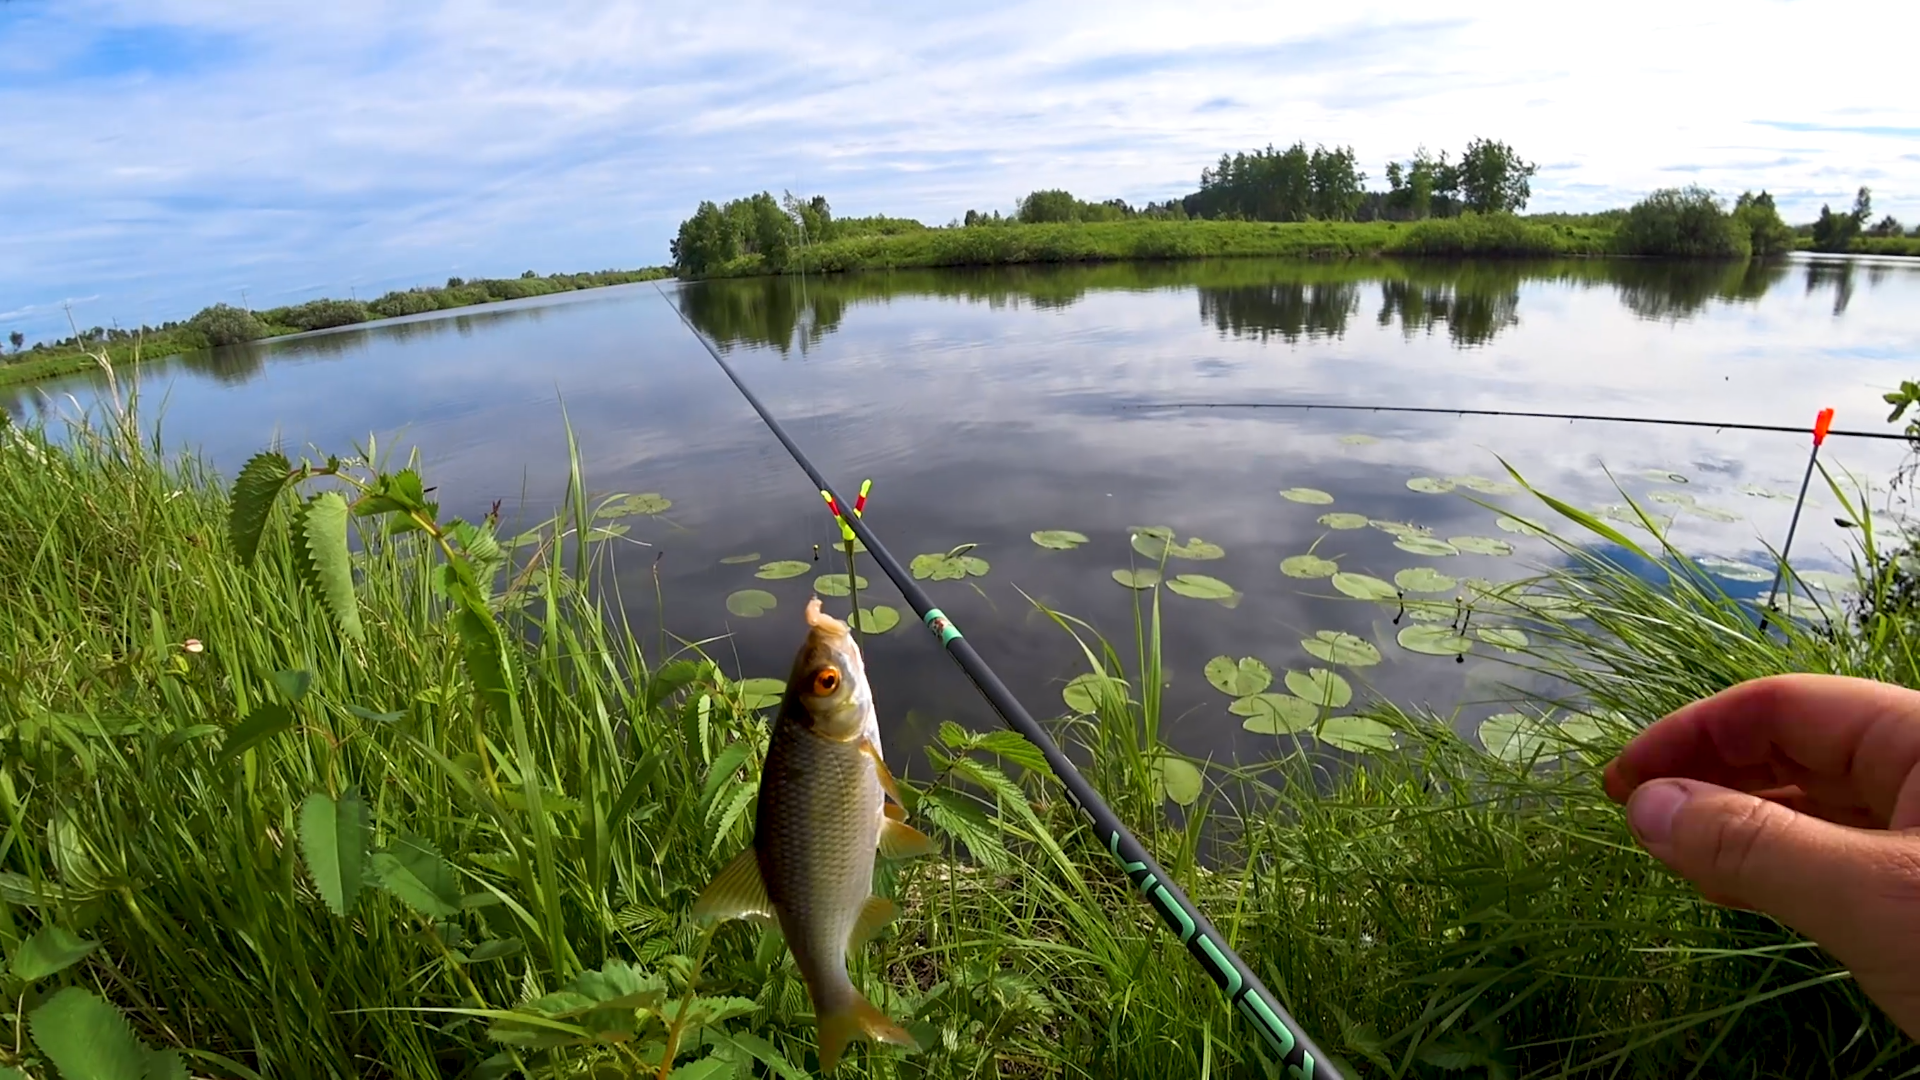 Рыбалка на карася на озере. Поплавок на окуня. Рыбалка на озере. Поплавочная рыбалка. Поплавок для рыбалки на озере.